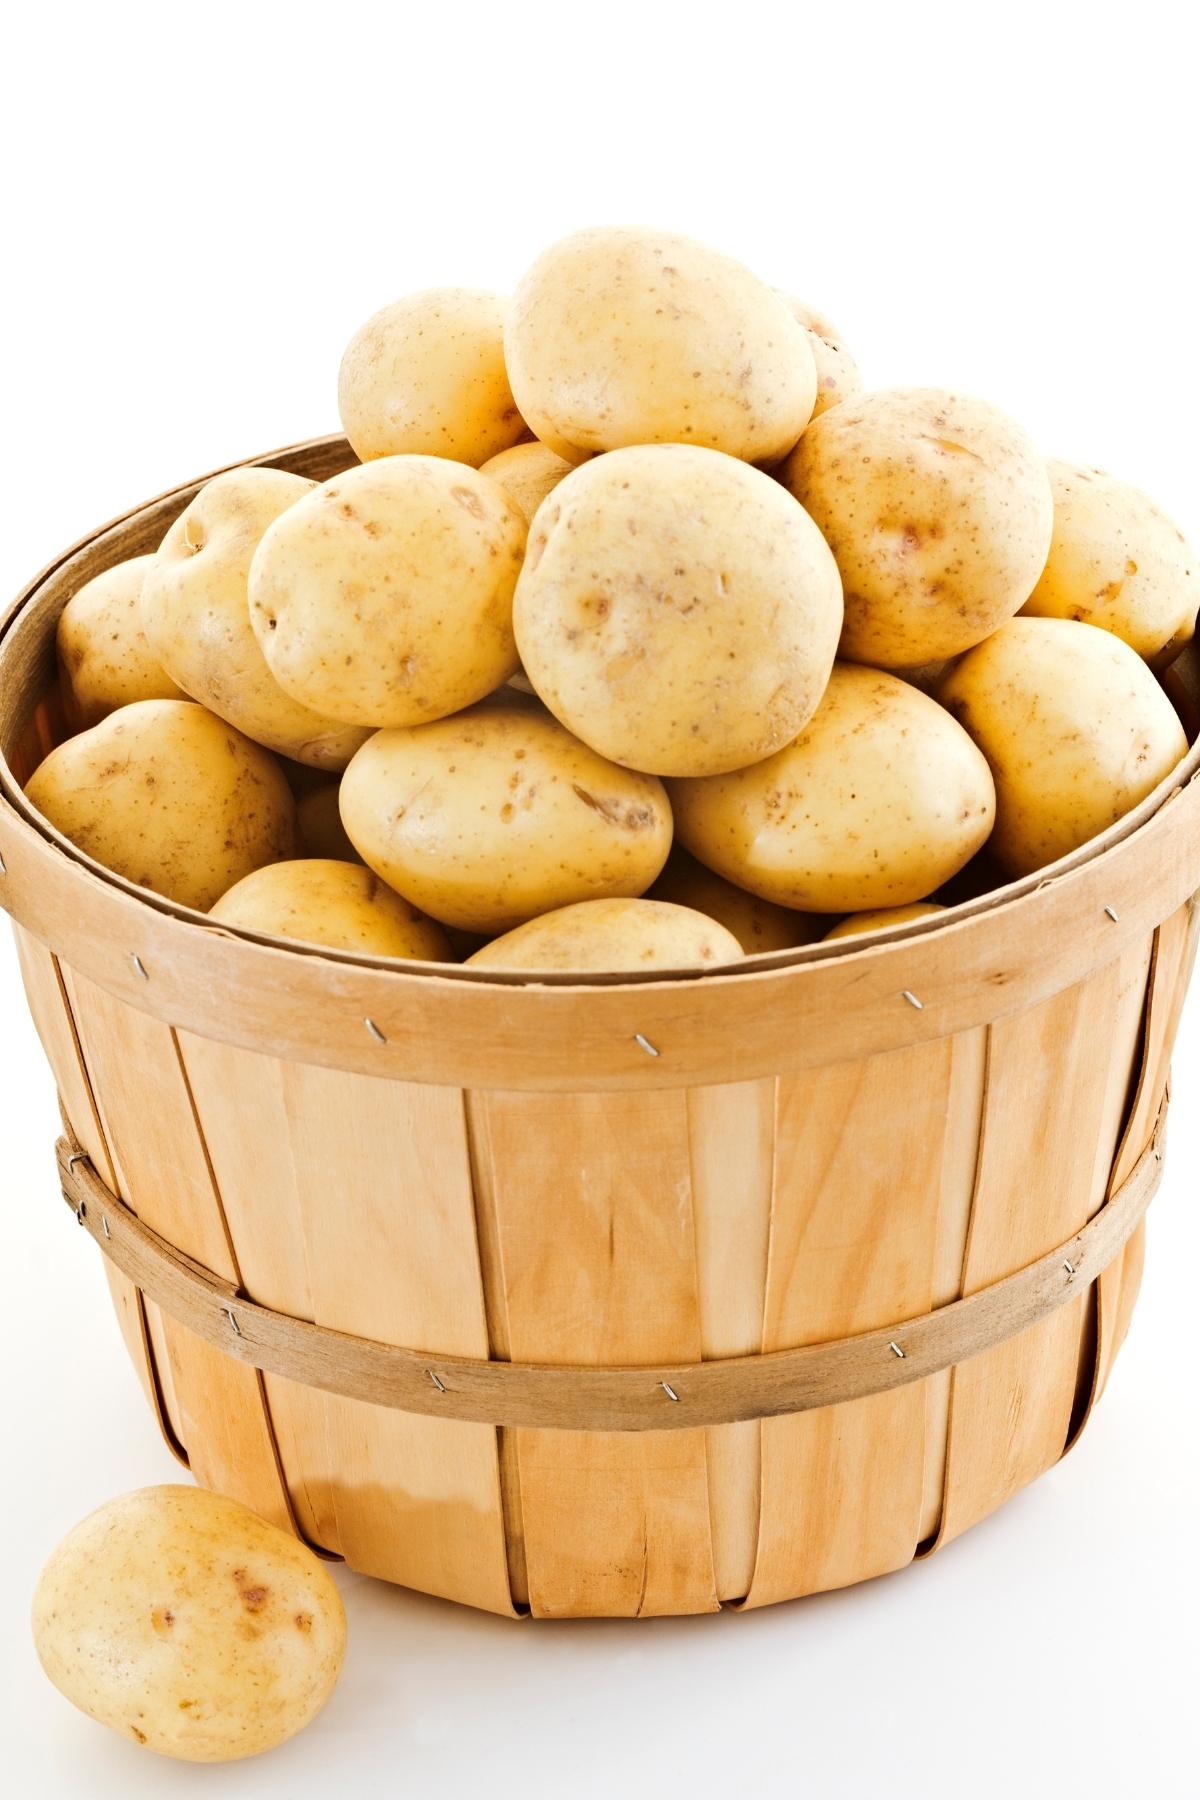 A wooden basket full of Yukon gold potatoes